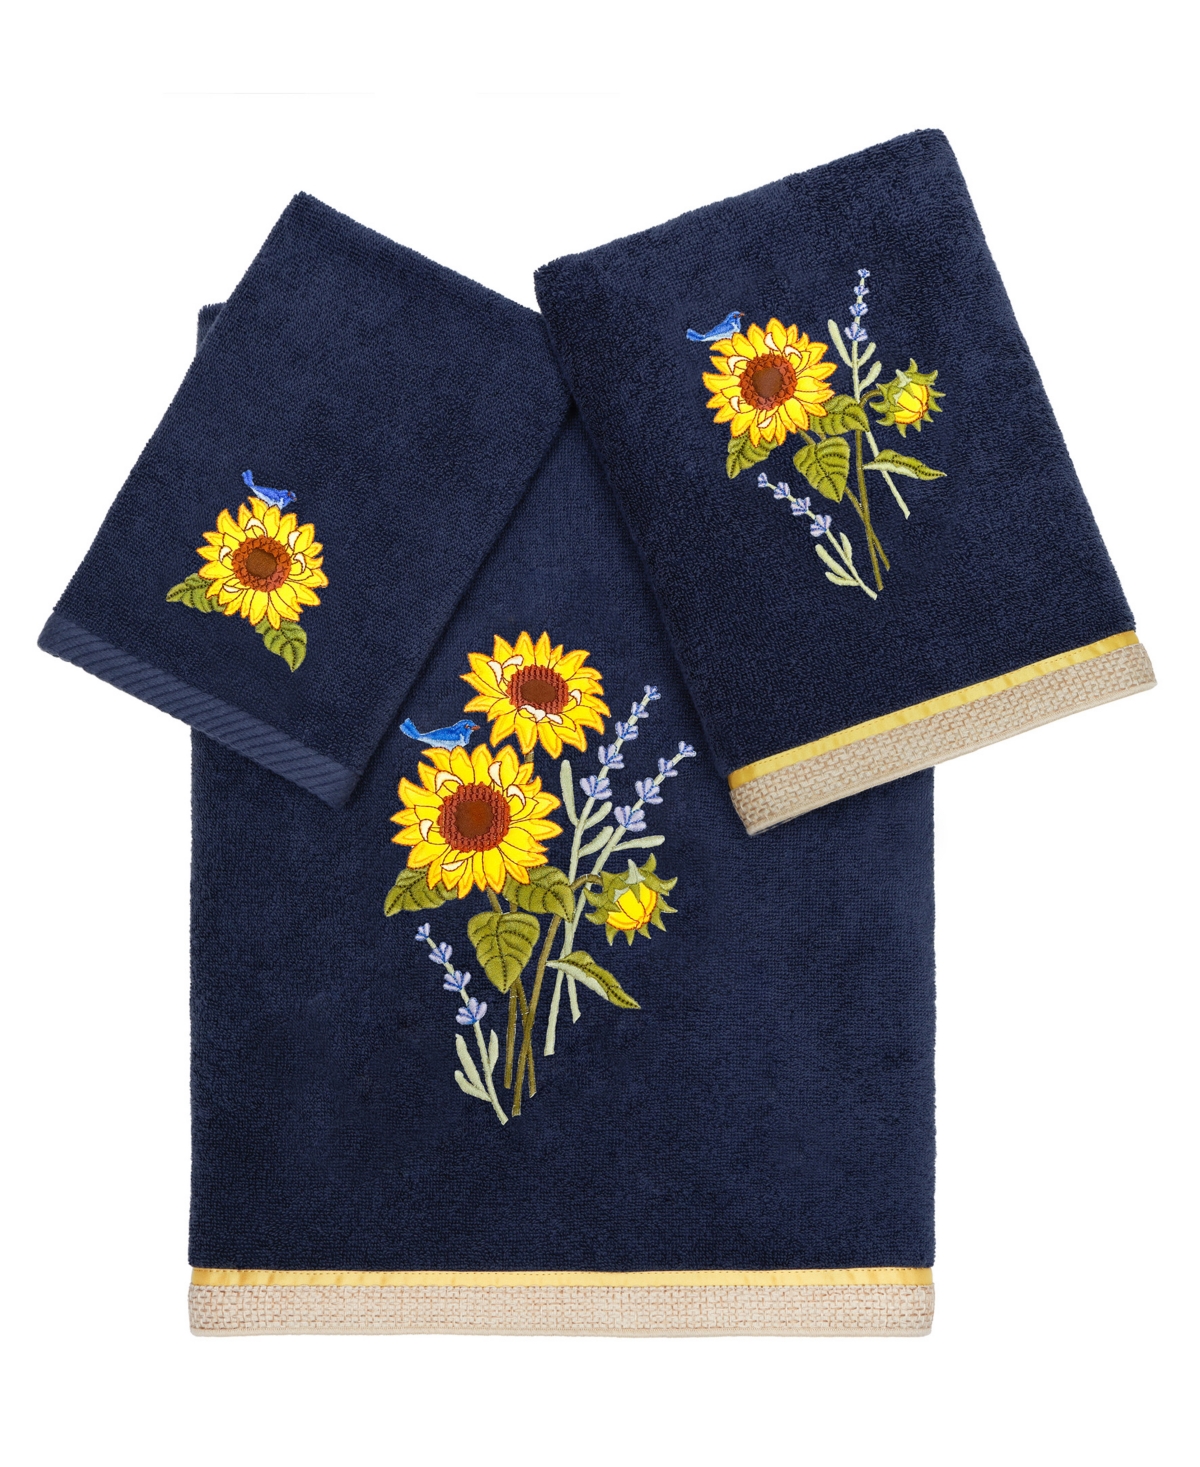 Linum Home Textiles Turkish Cotton Girasol Embellished Towel Set, 3 Piece In Marine